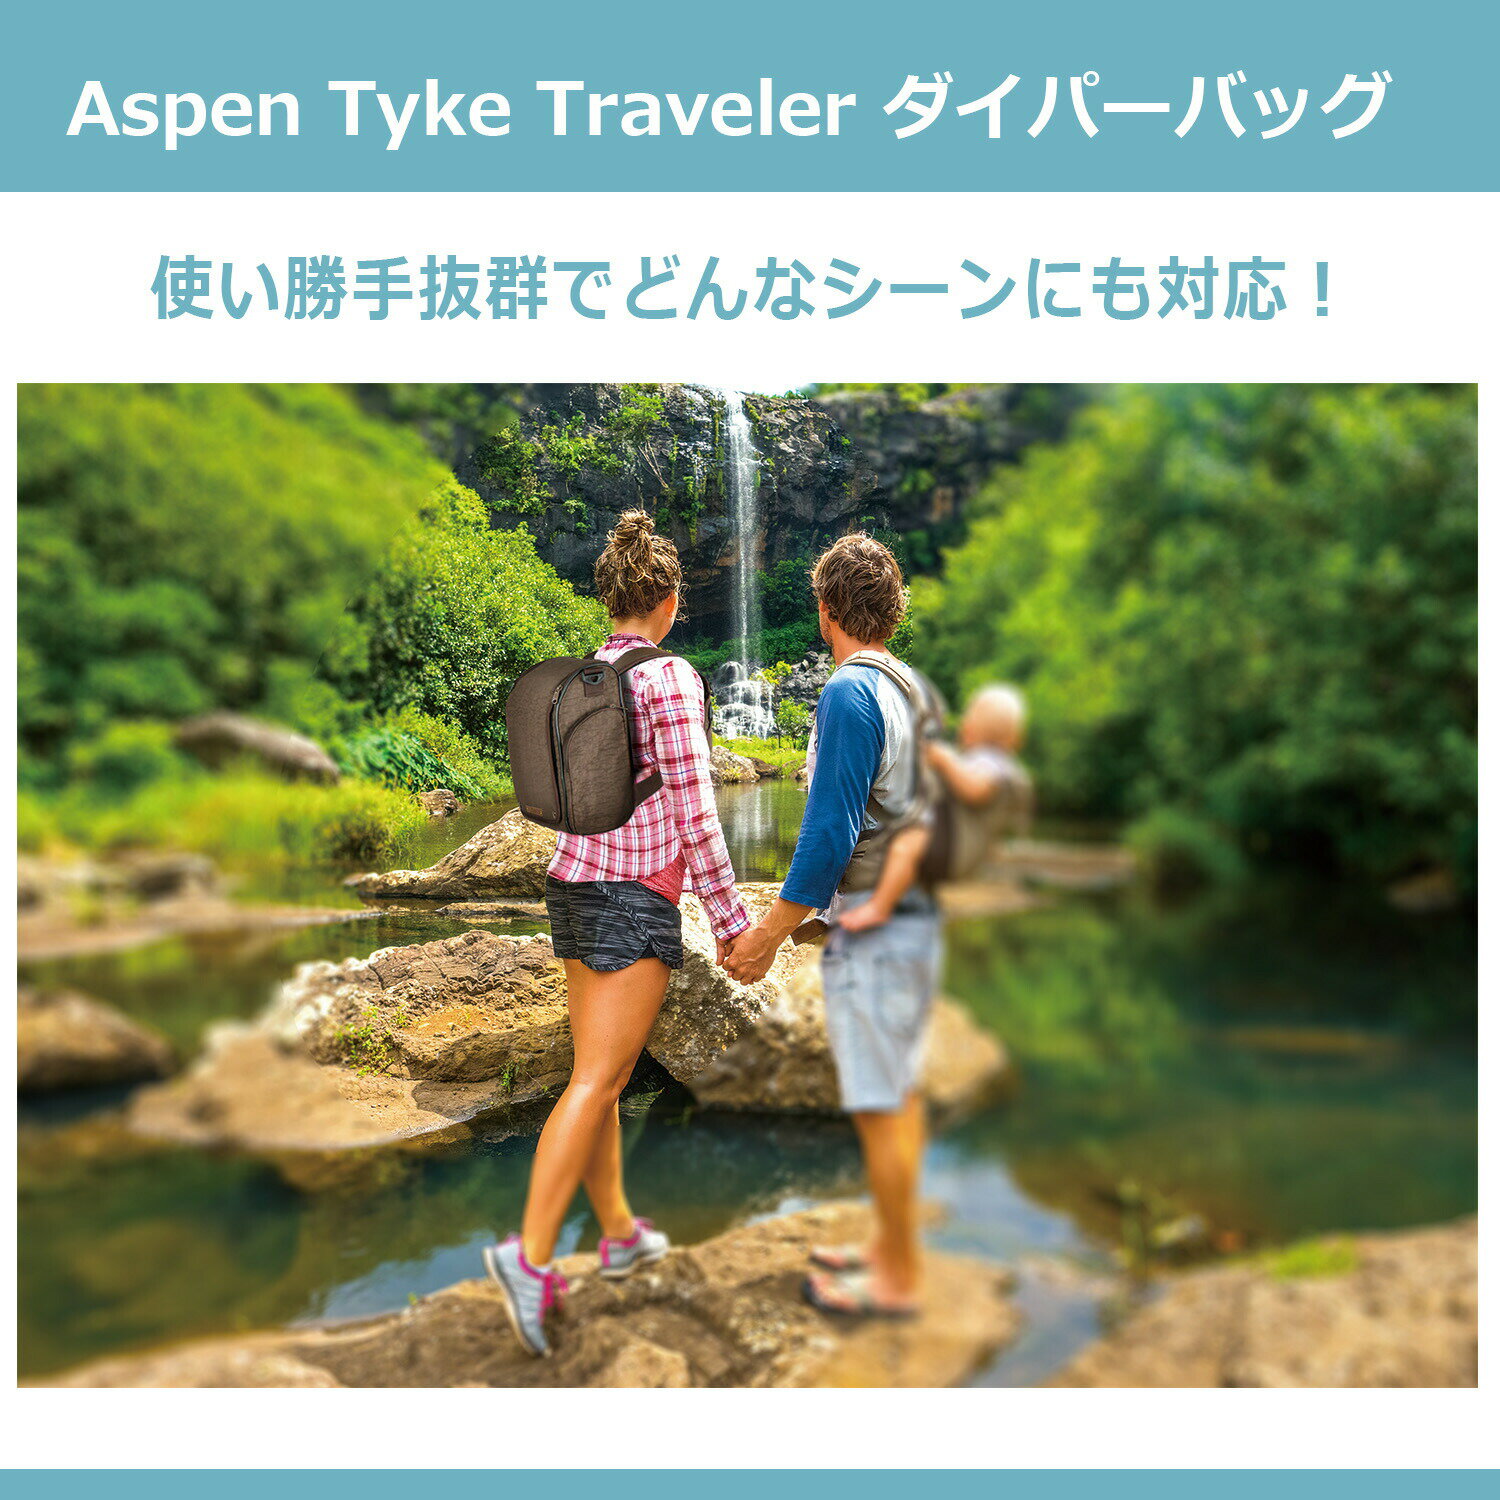 Aspen Tyke Traveler ダイパーバッグ 全4色 男女兼用 ベビーバッグ マザーズバッグ ダディーズバッグ